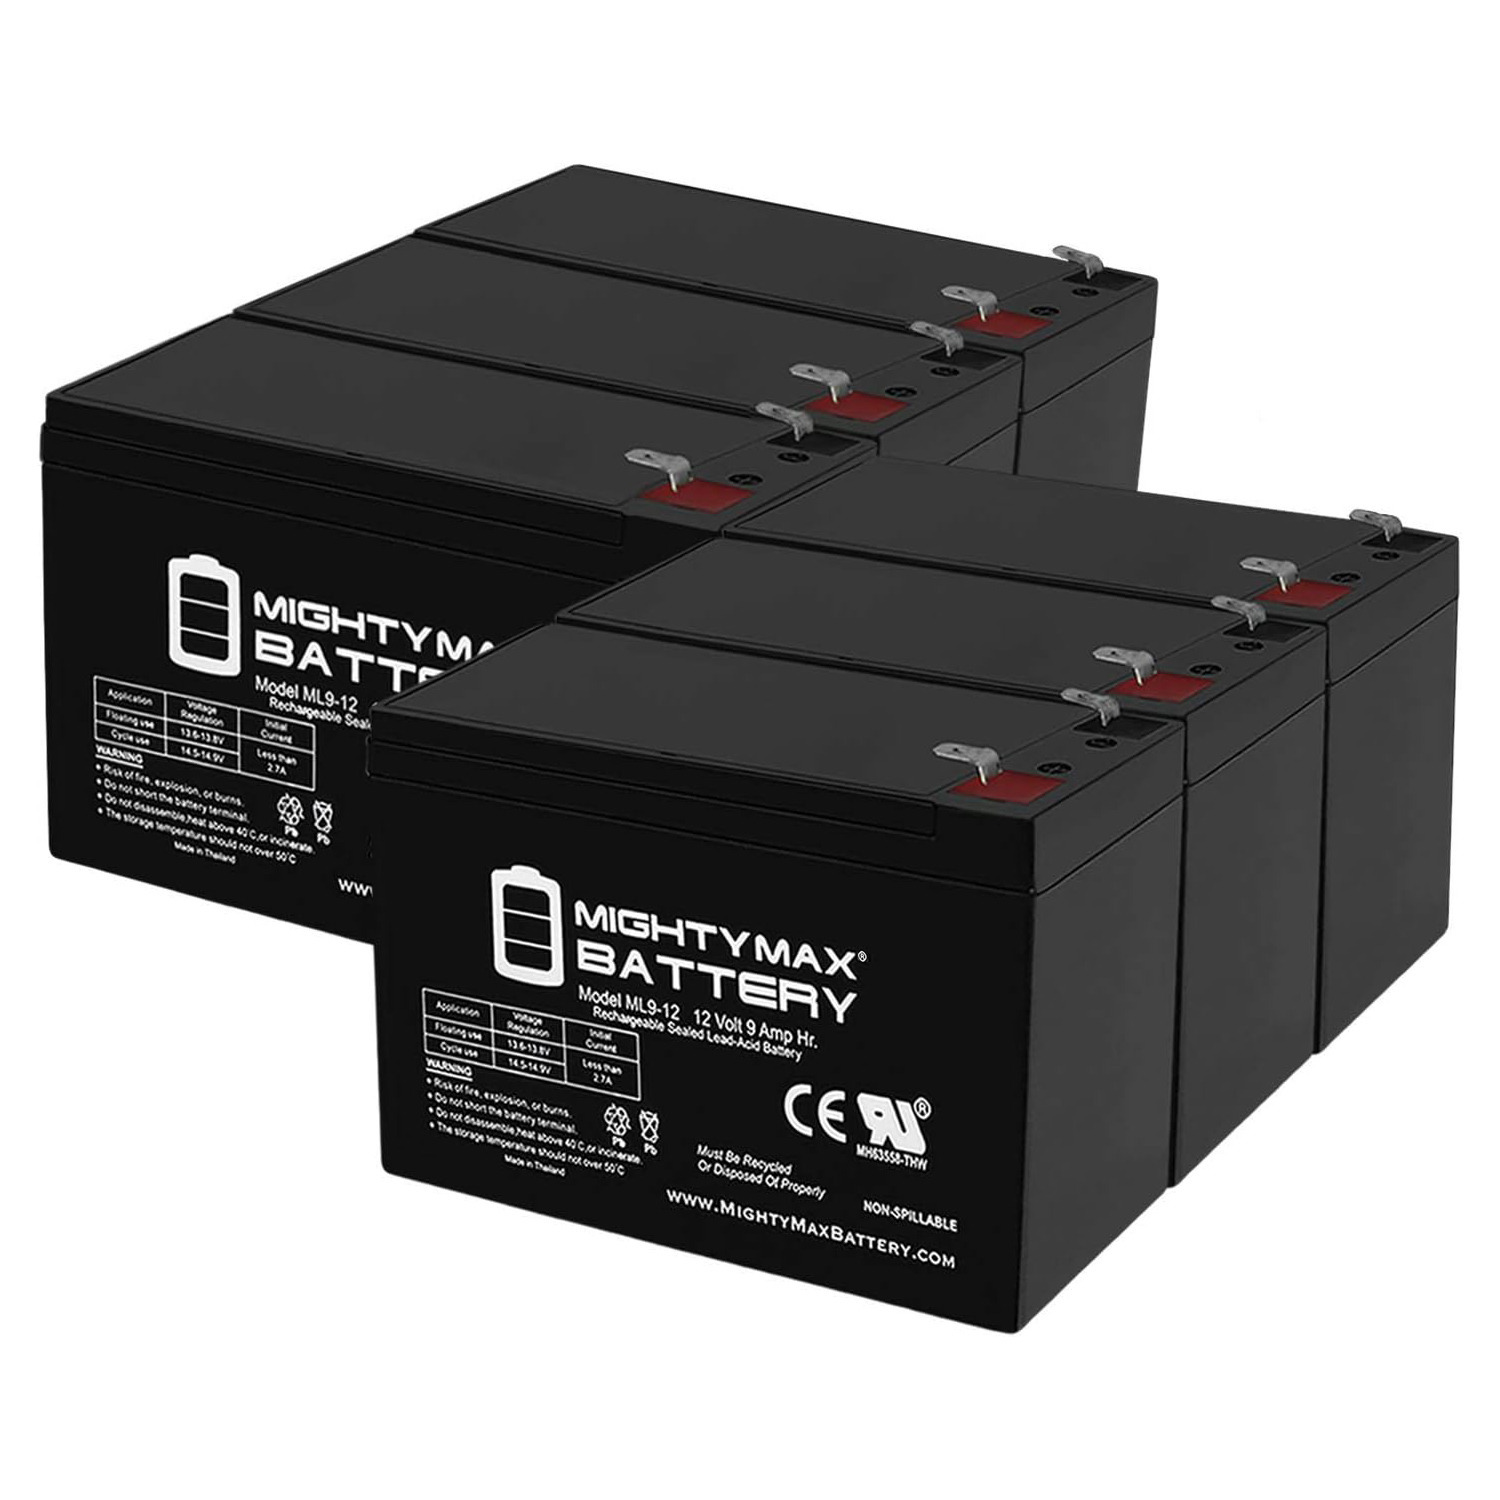 12V 9Ah SLA Replacement Battery for HSL1079 - 6 Pack